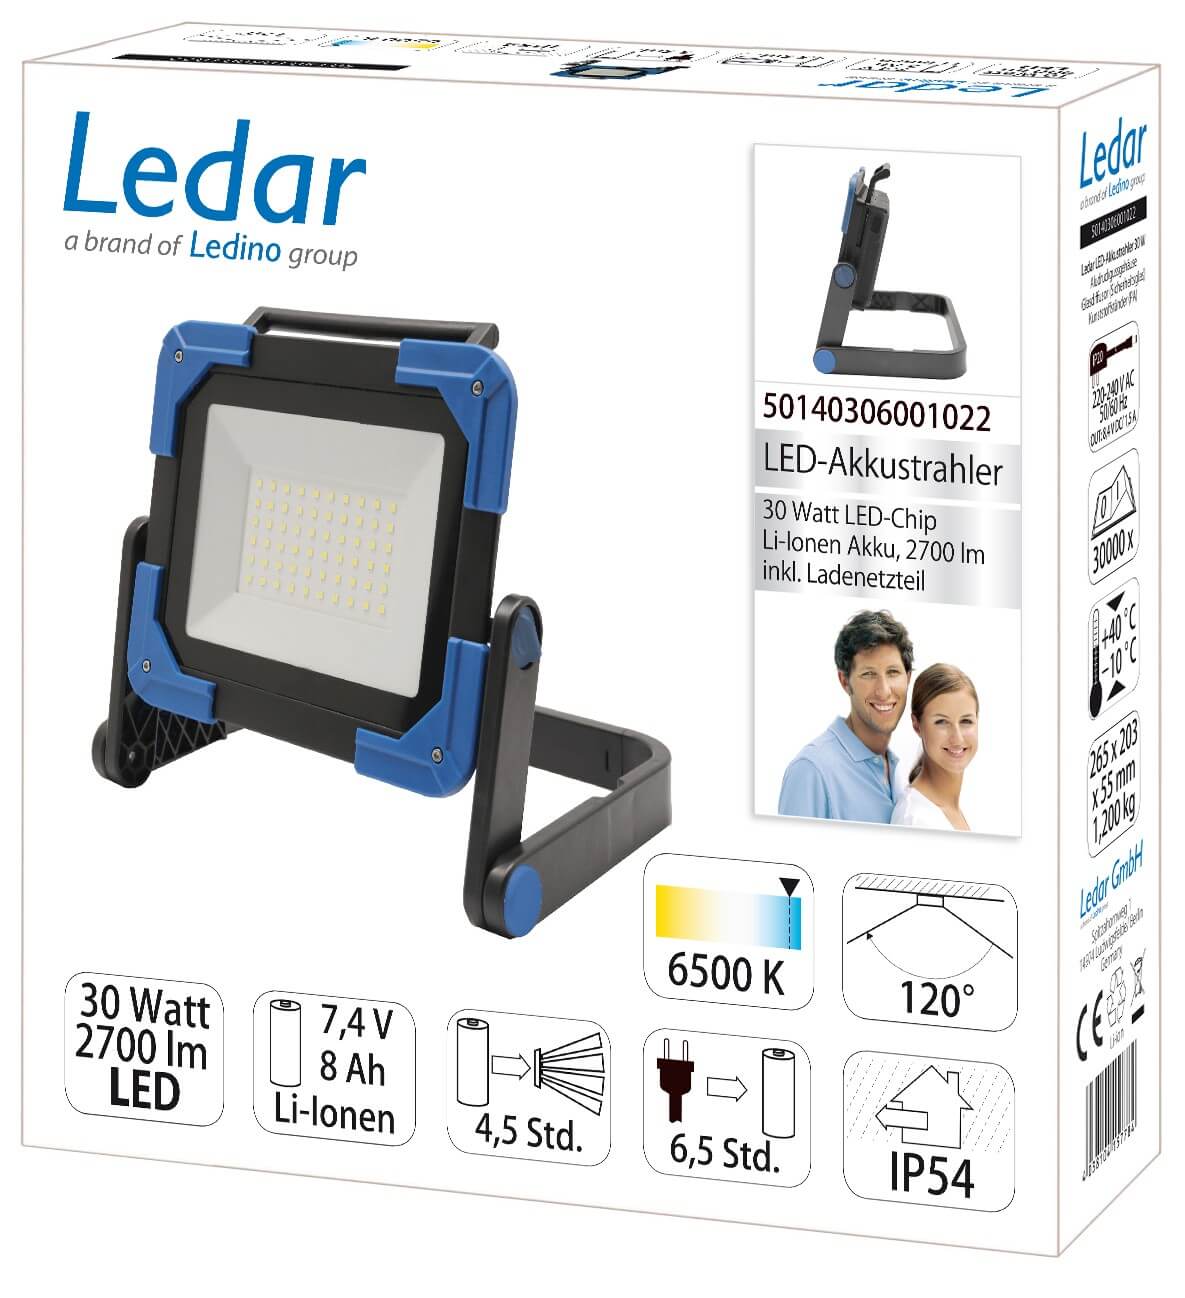 Vorzüglich Ledar LED-Akkustrahler 30W 3000lm, für 7,4V/8Ah Li-Ionen-Akku Beleuchtung Bau, mobile Renovierung